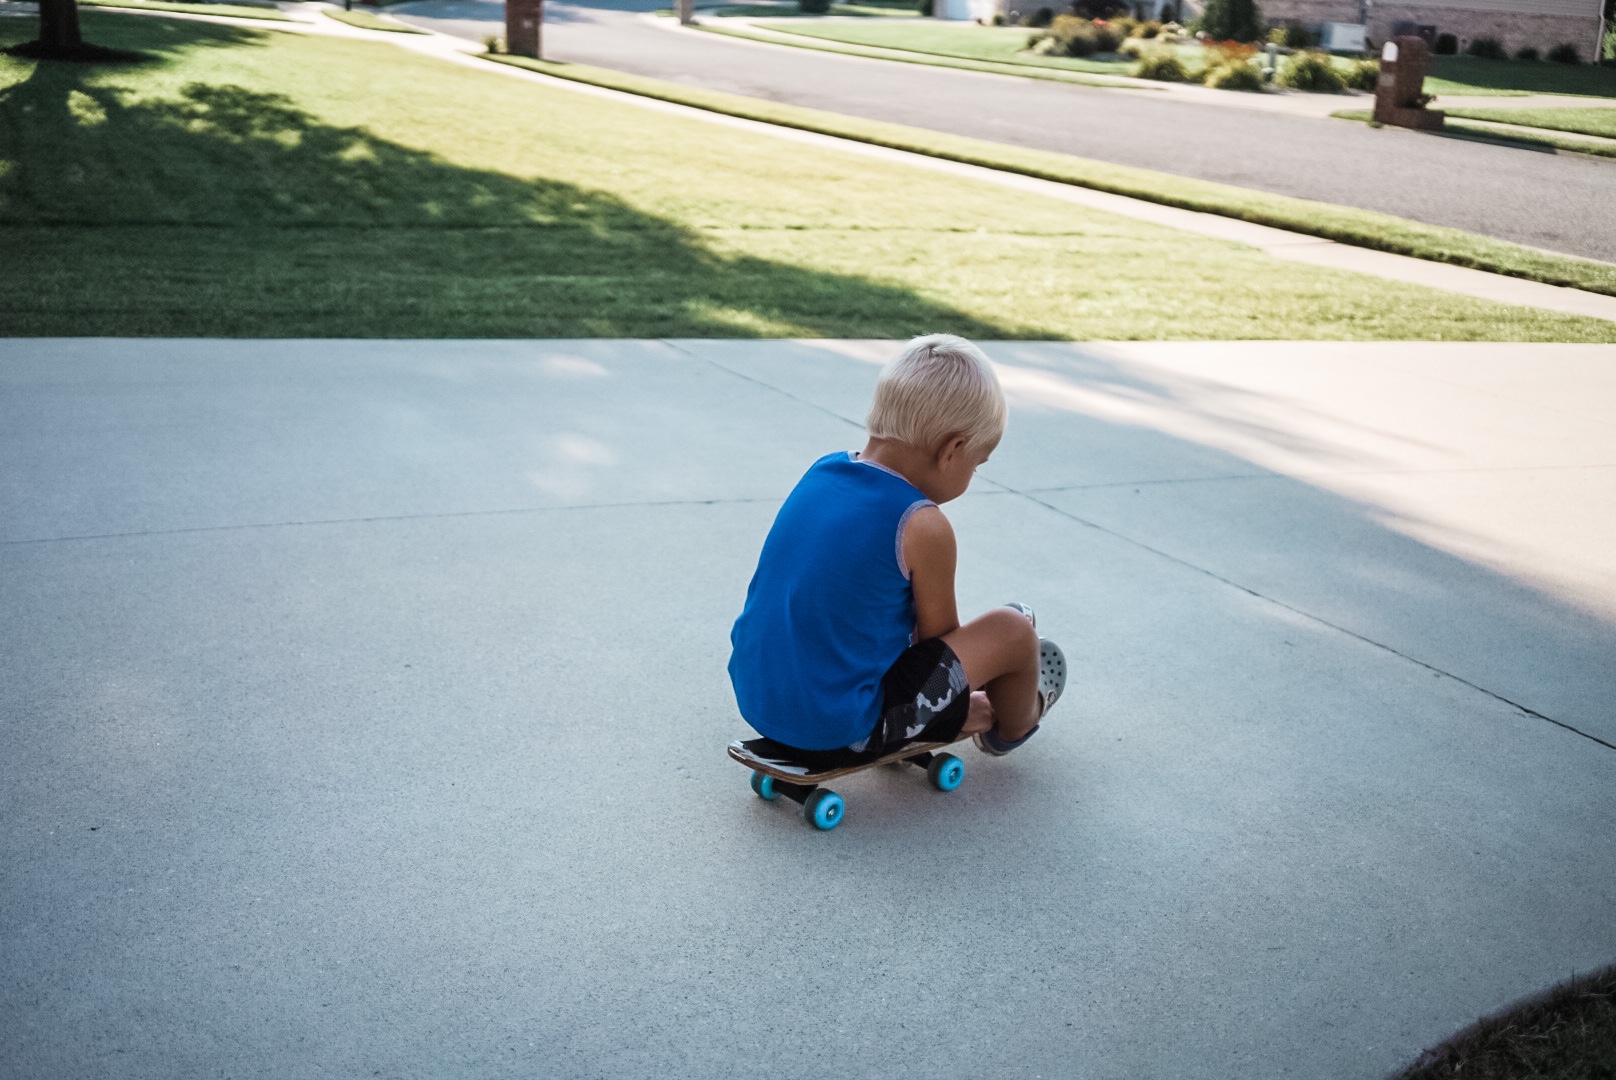 Boy on sitting on a skate board rolling down a hill